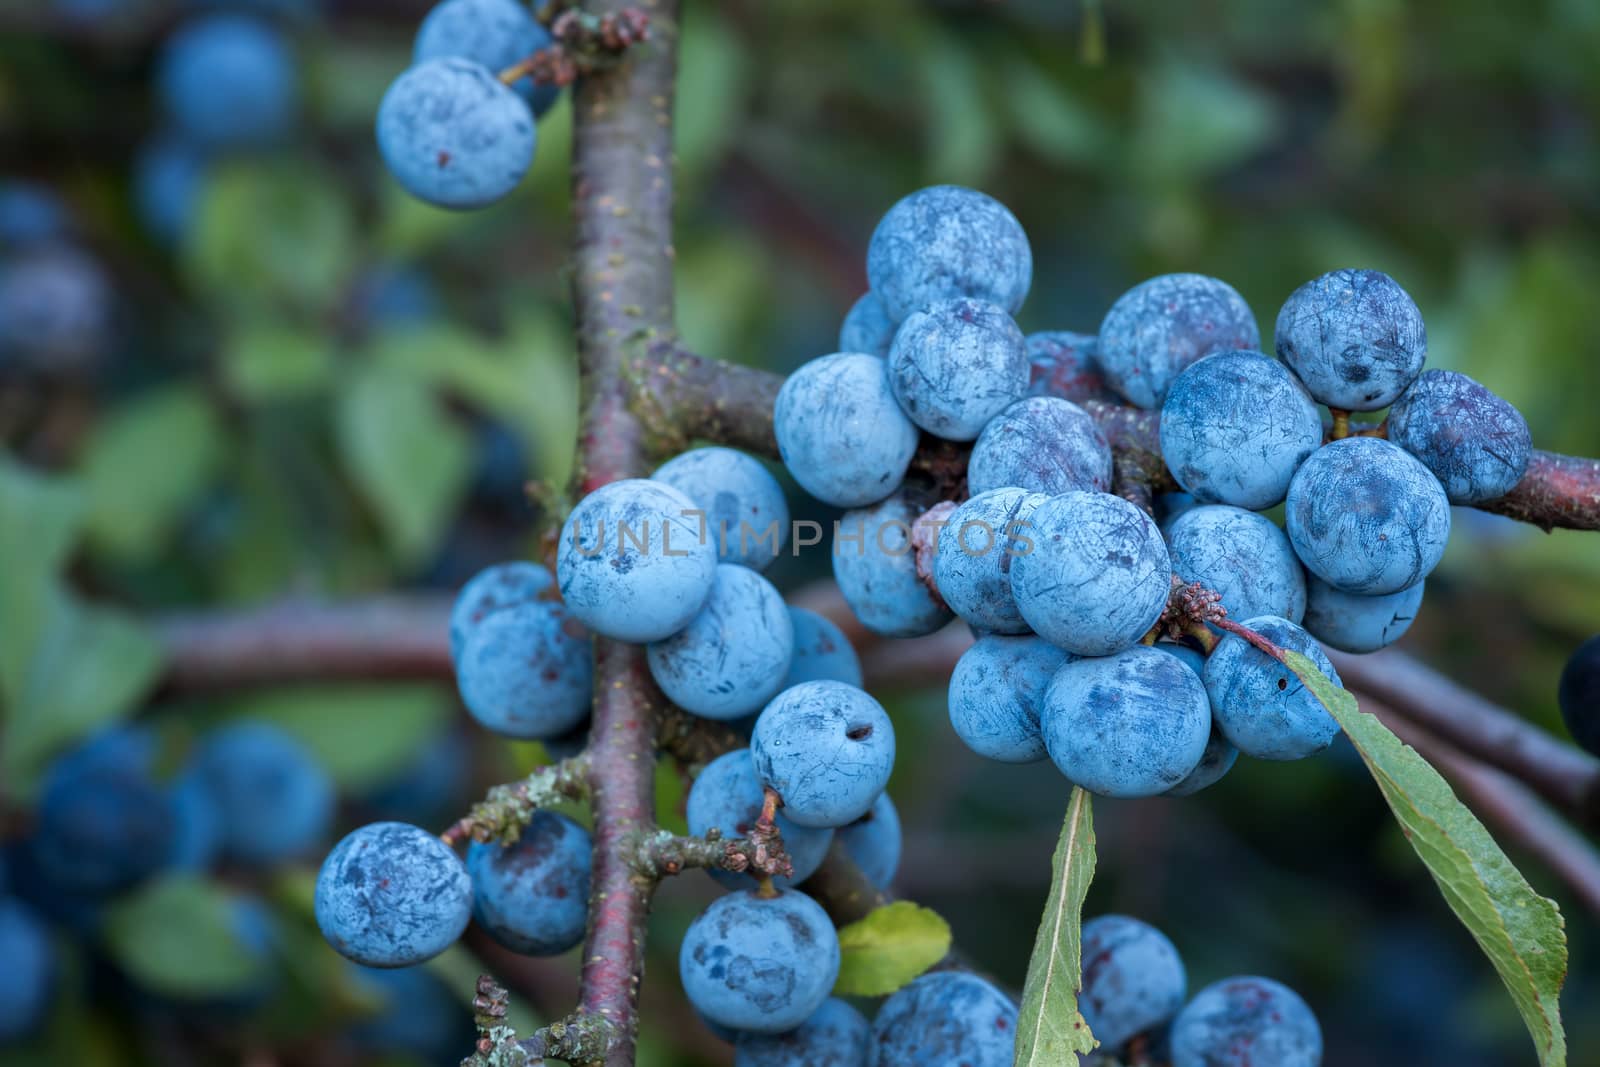 Sloe bush with many fruits by Digoarpi